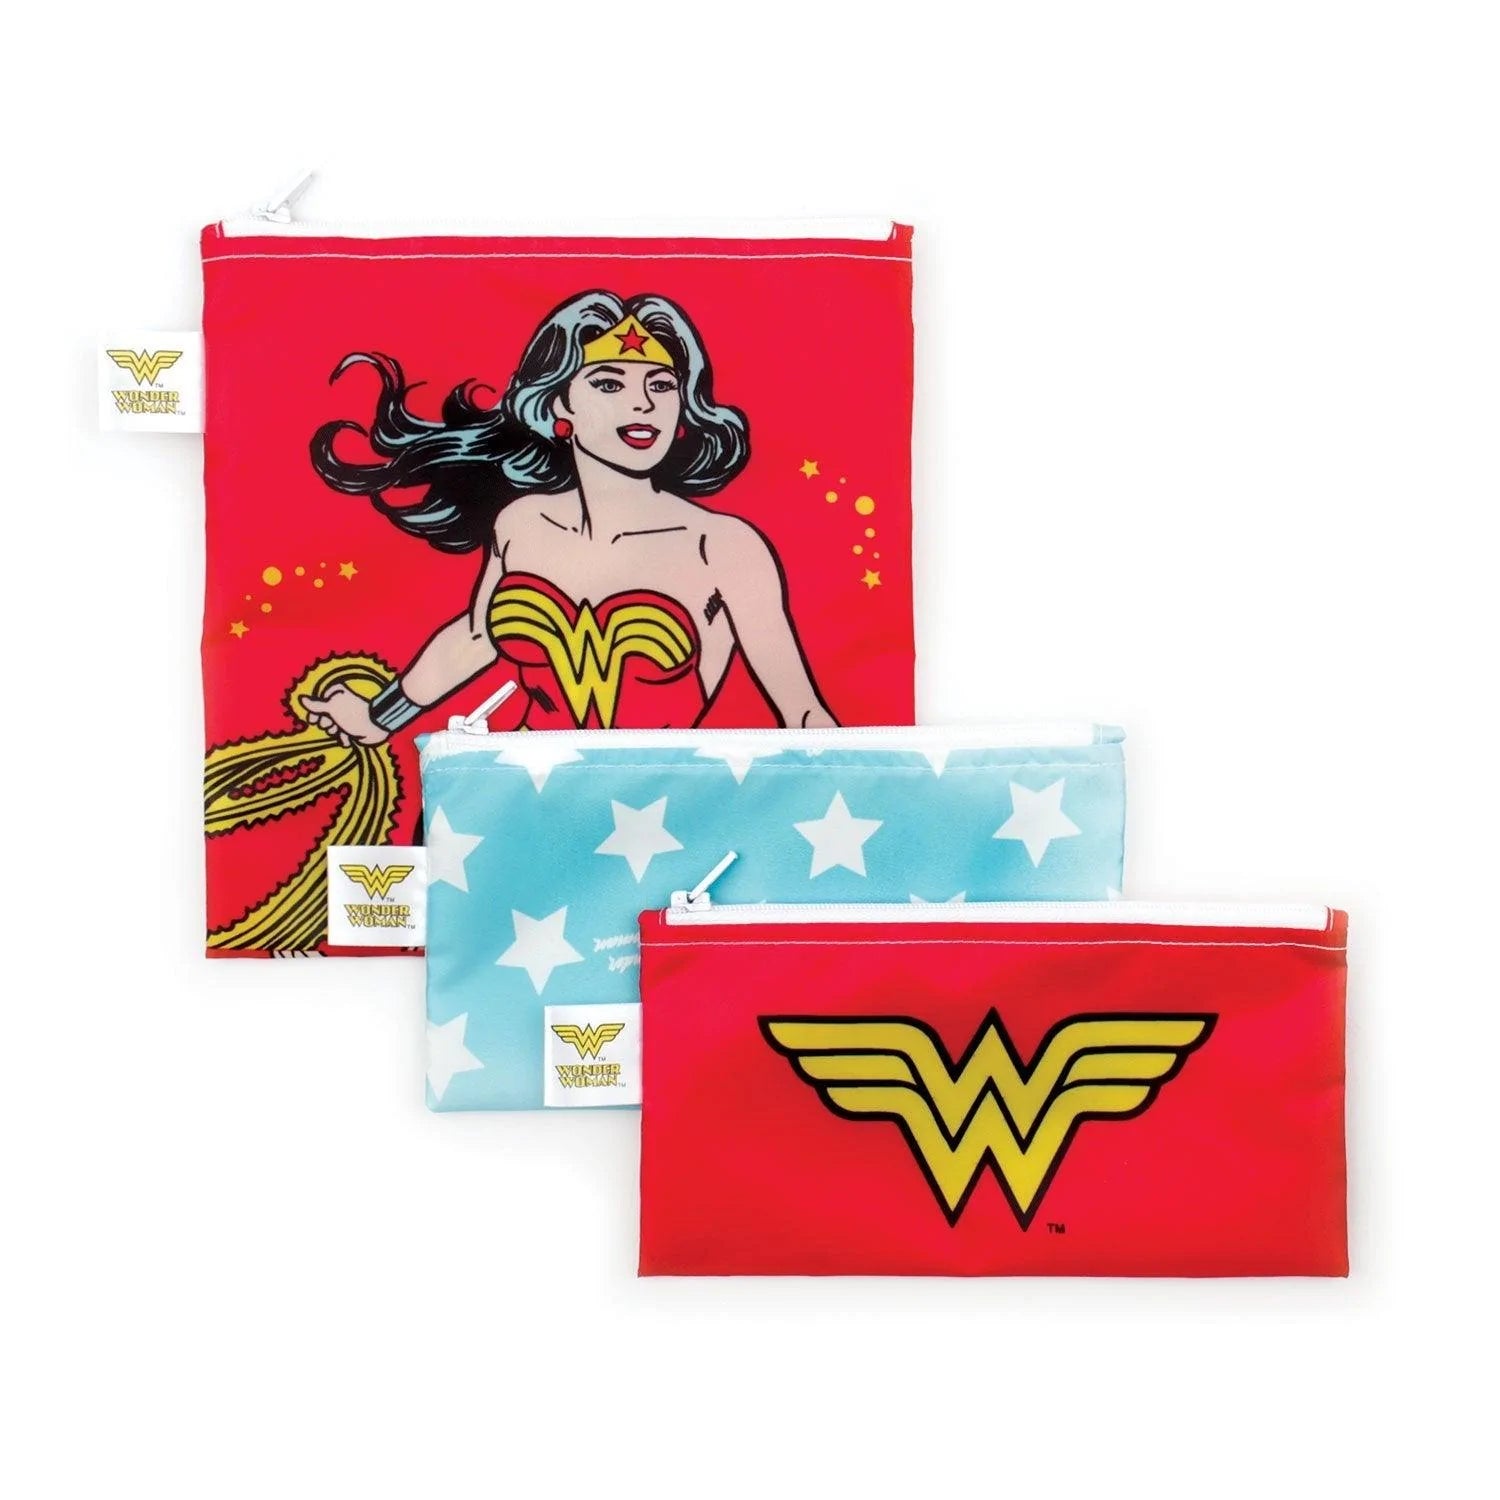 Reusable Snack Bag, 3-Pack: Wonder Woman - Bumkins